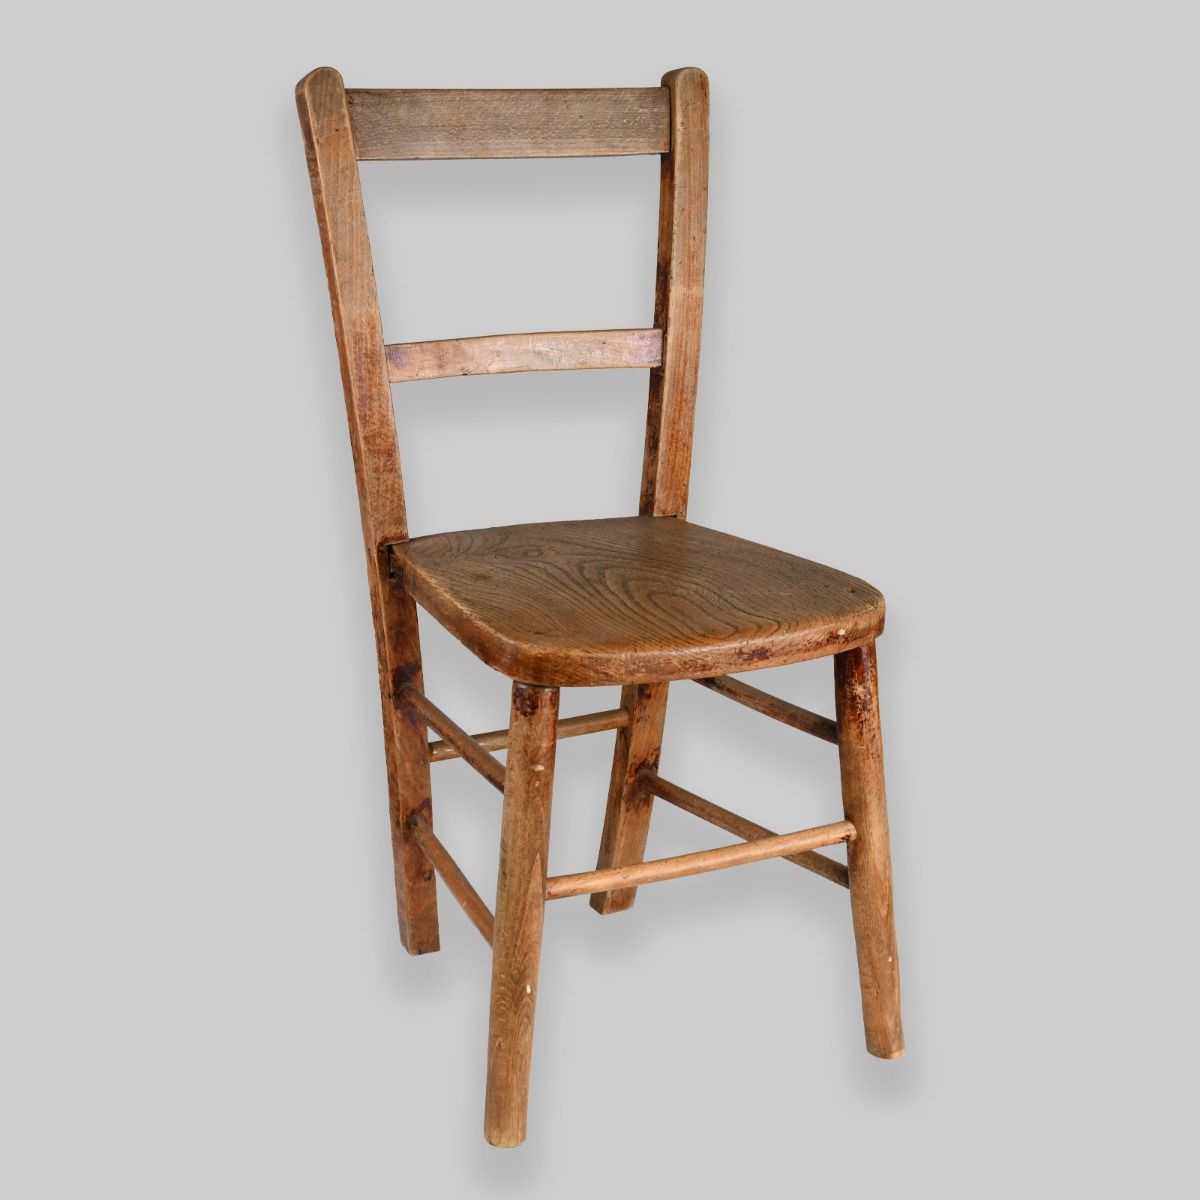 Vintage Mid Century Wooden School Chair